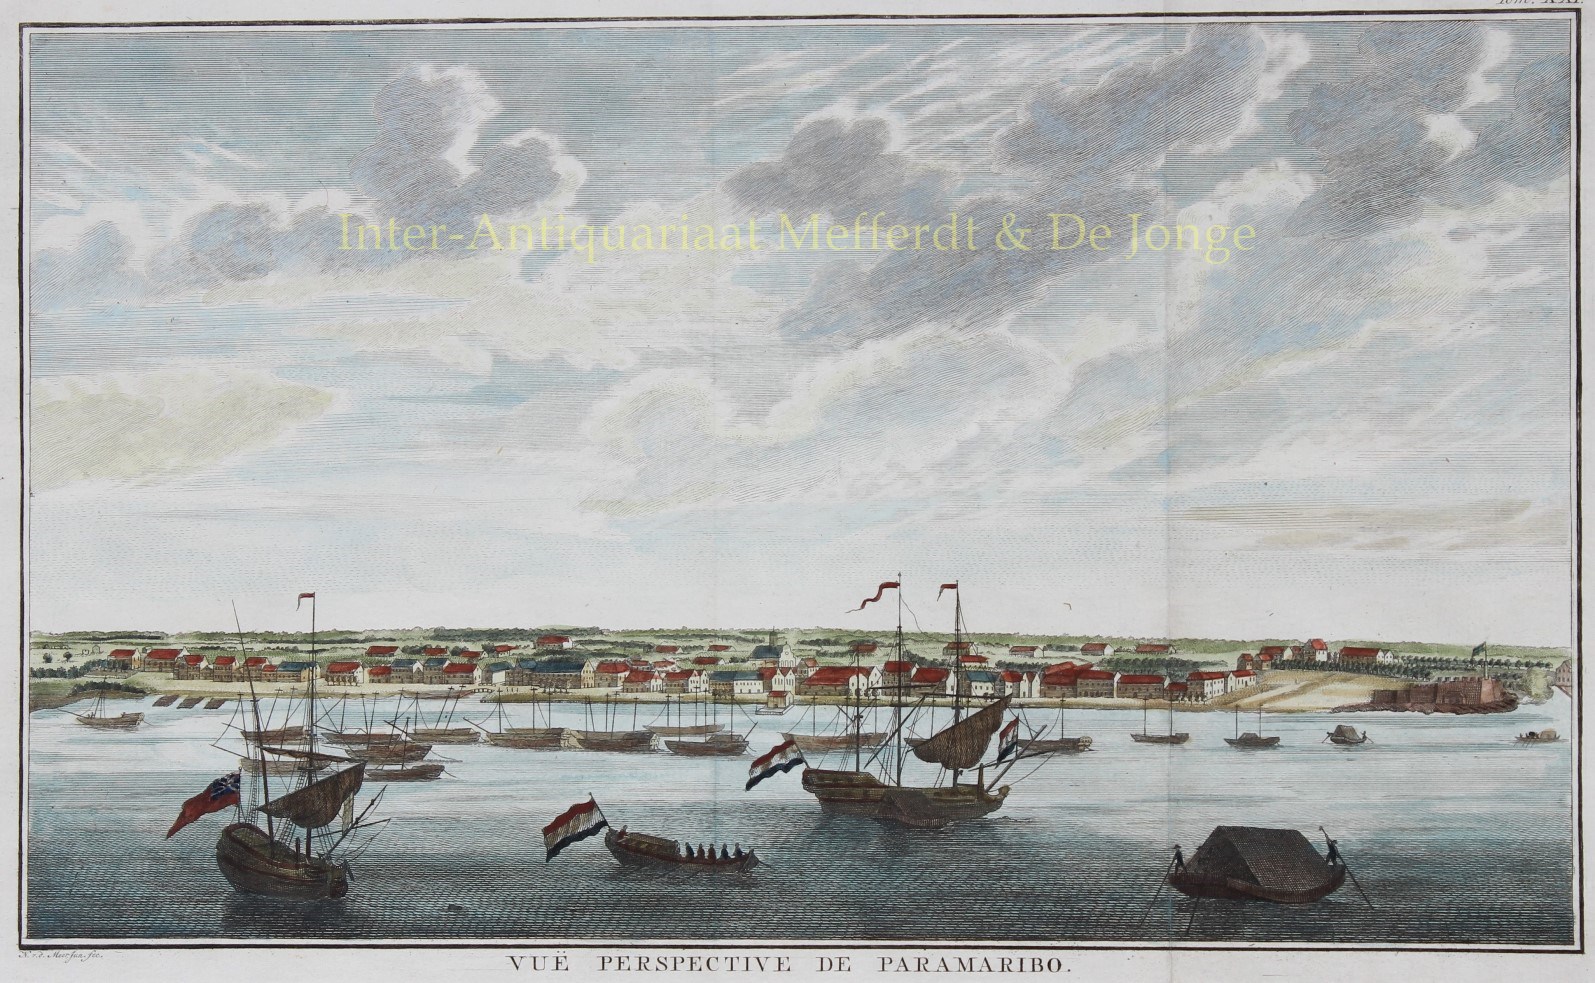  - Waterkant Paramaribo - Noach van der Meer, 1757